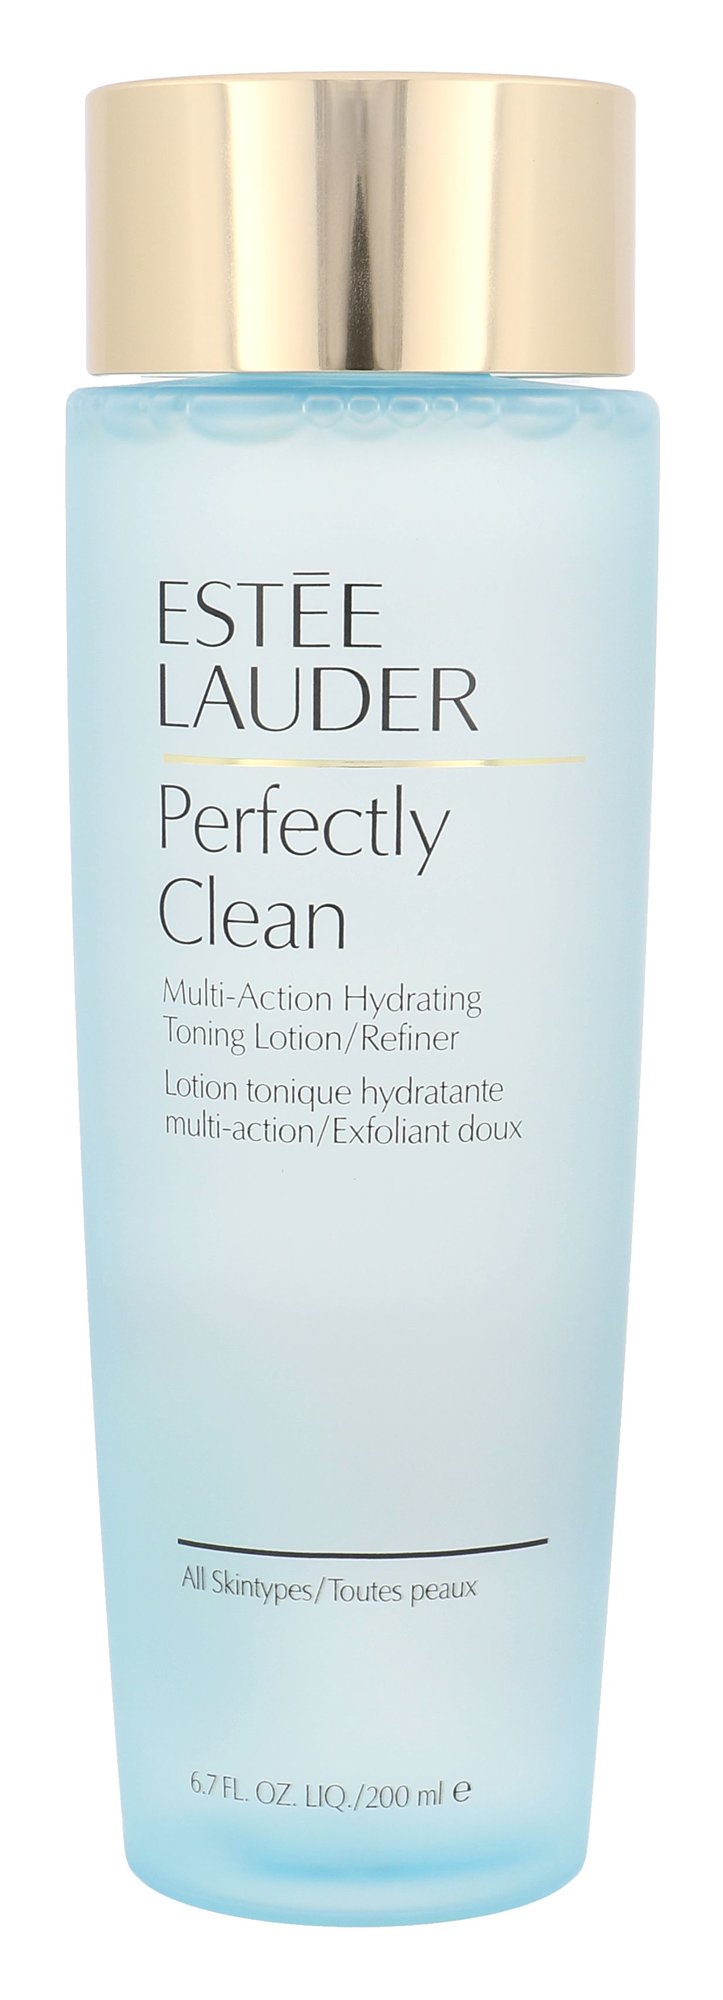 Esteé Lauder Perfectly Clean Multi-Action 200ml valomasis vanduo veidui